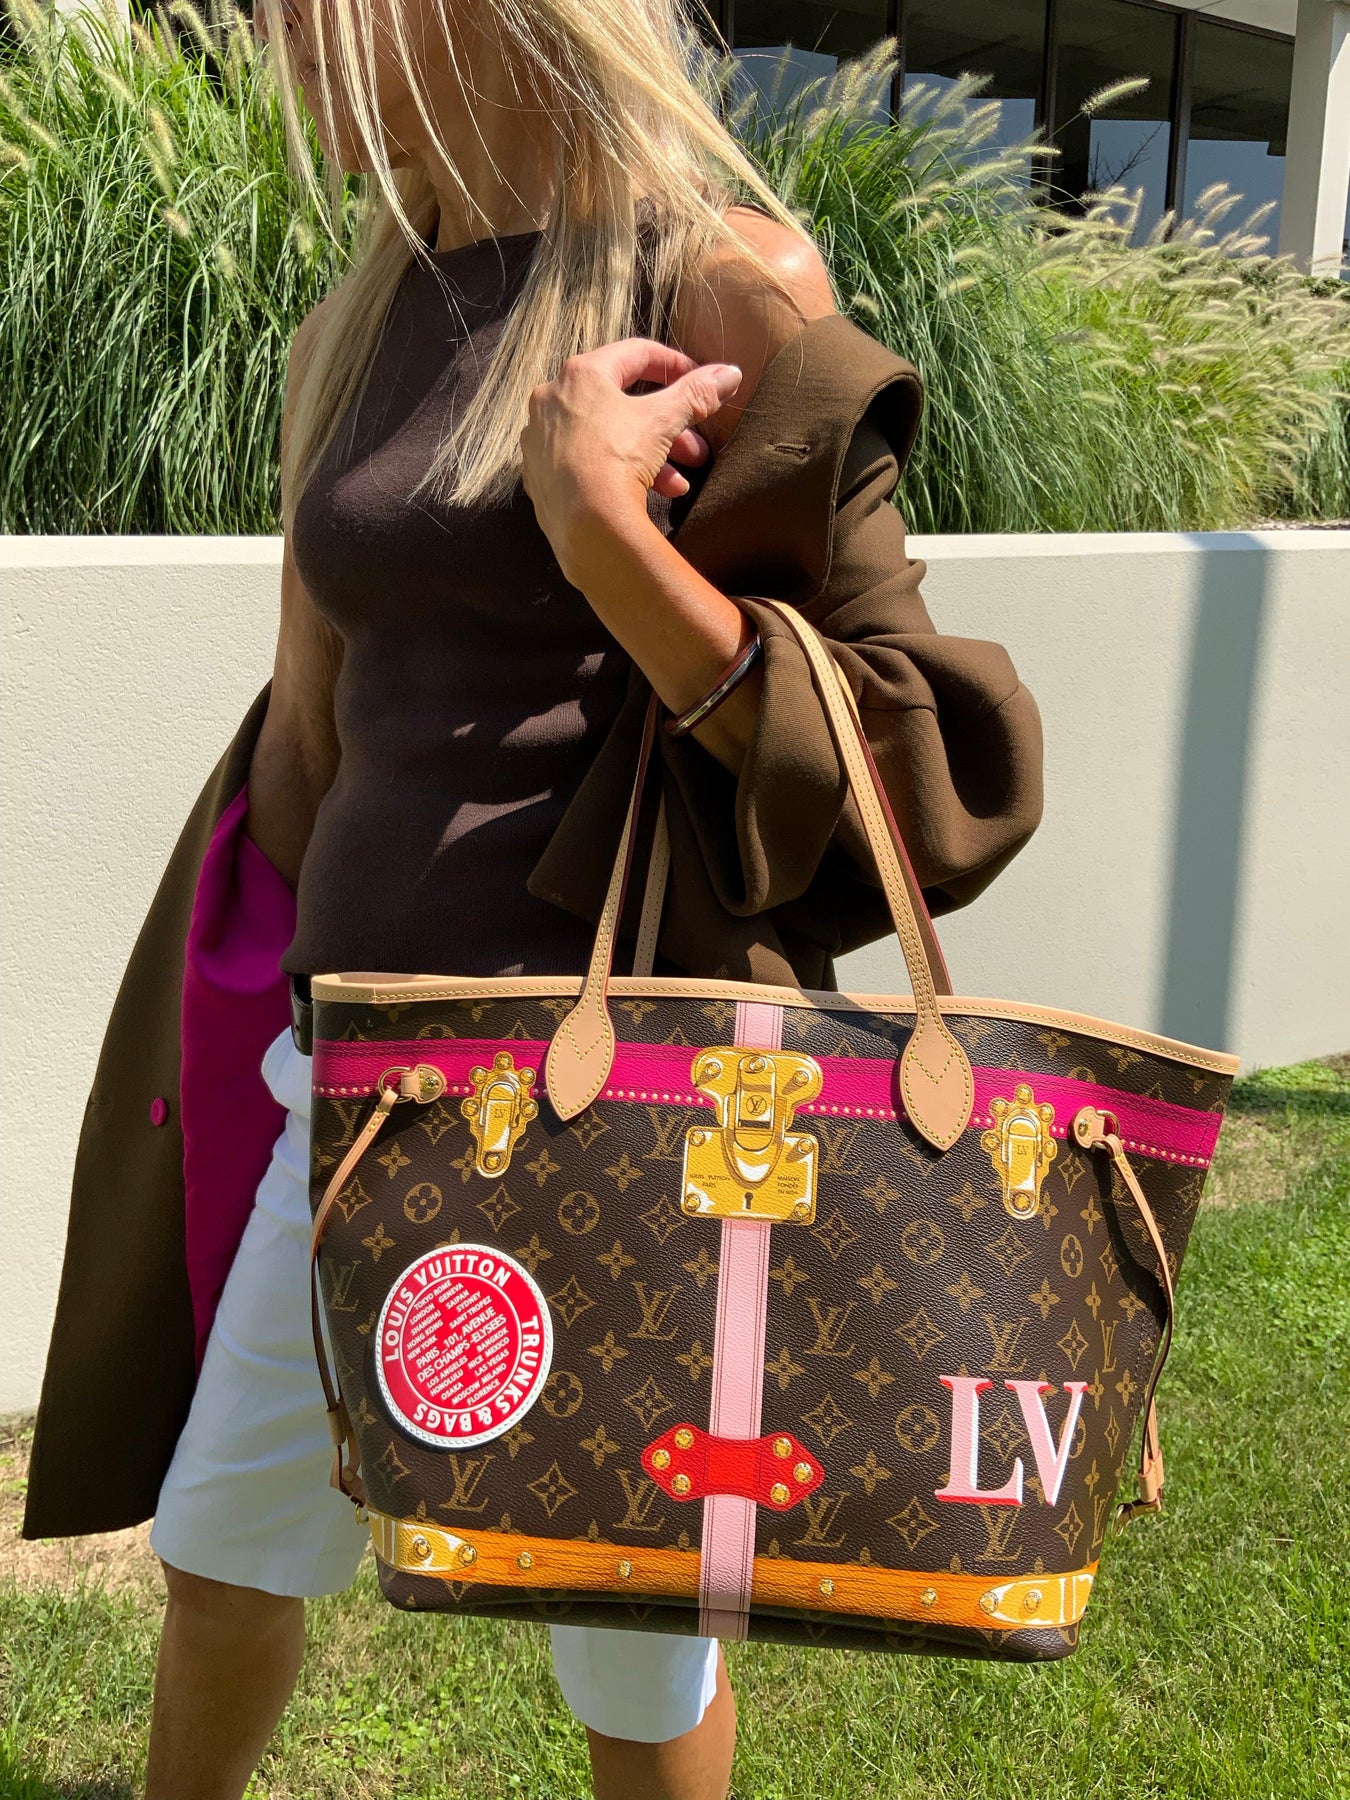 Brown Louis Vuitton Monogram Summer Trunks Neverfull MM Tote Bag